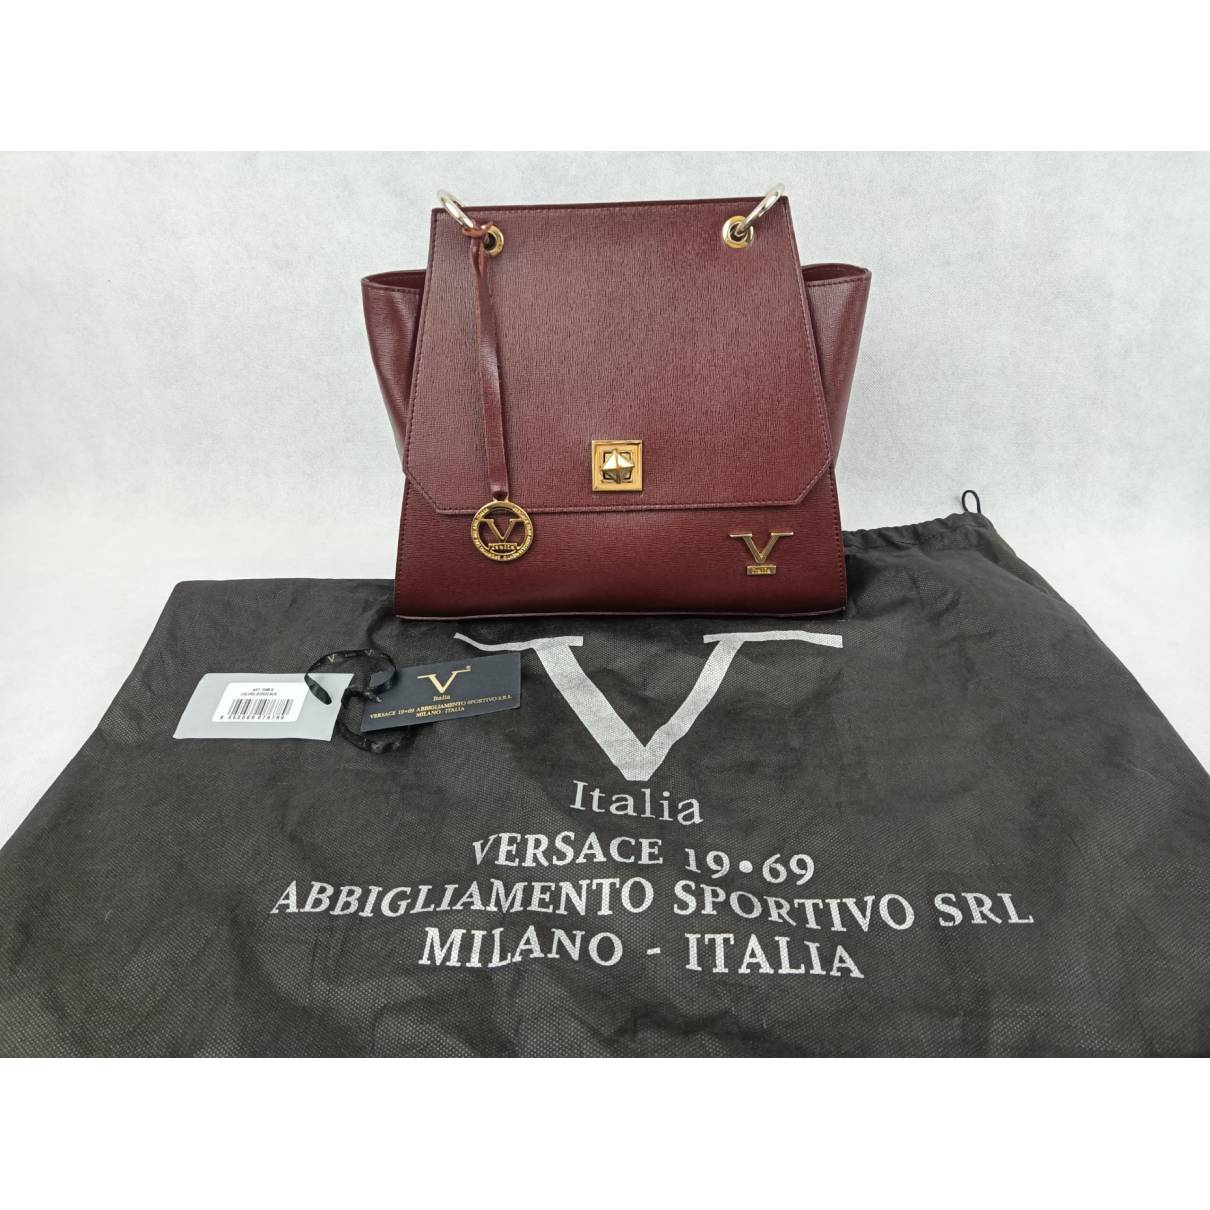 Vintage Versace 1969 Italia Abbigliamento Sportivo SRL bag